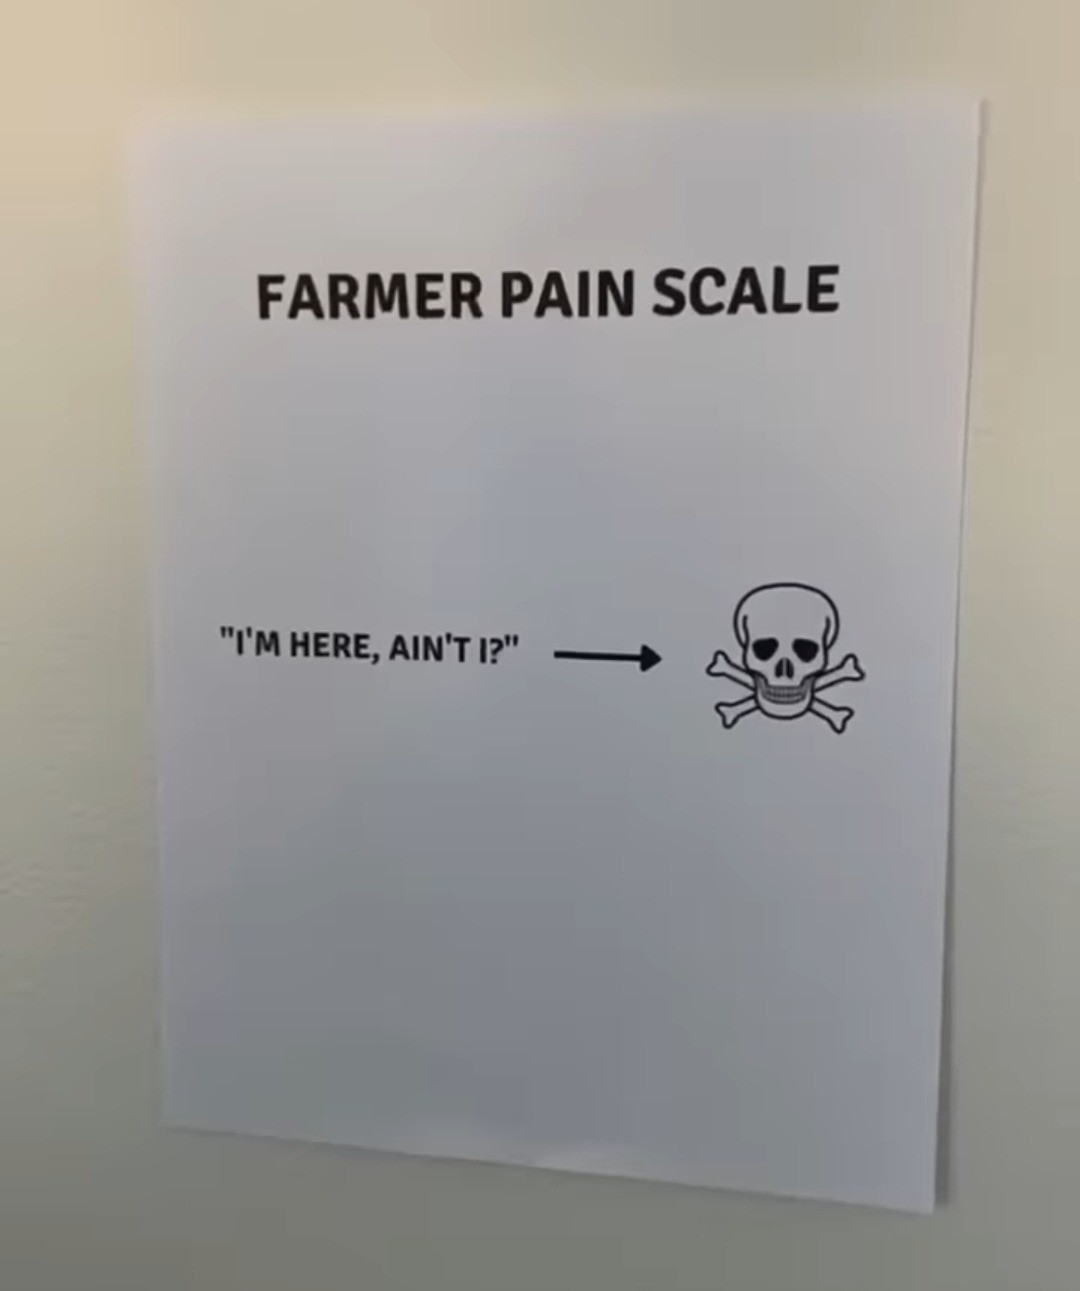 farmer.jpg